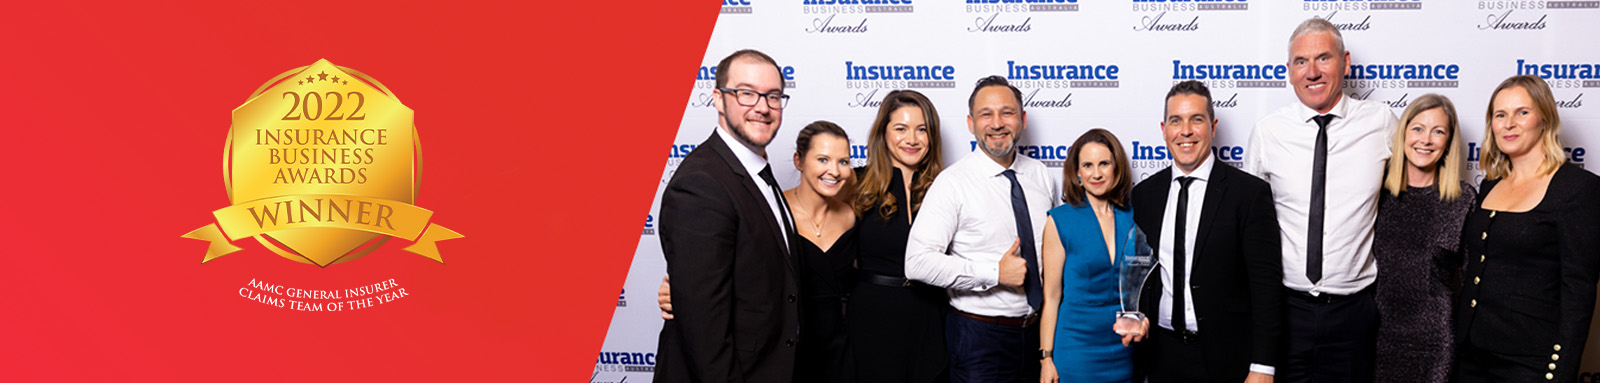 2022 Insurance Business Awards Banner